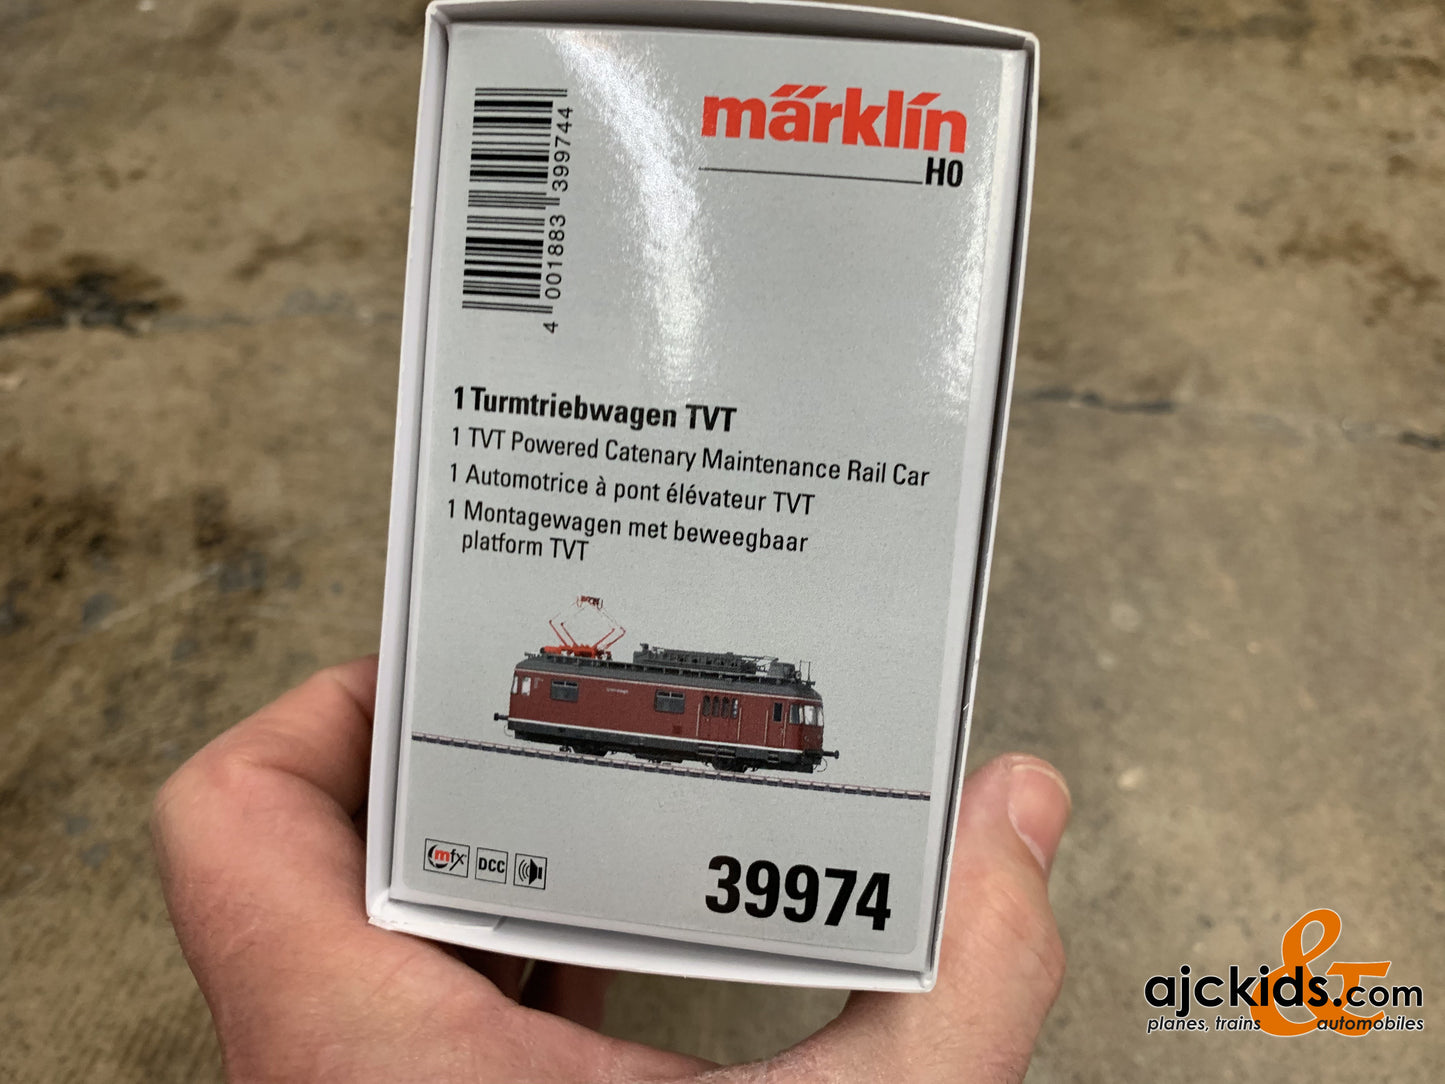 Marklin 39974 - TVT Powered Catenary Maintenance Rail Car